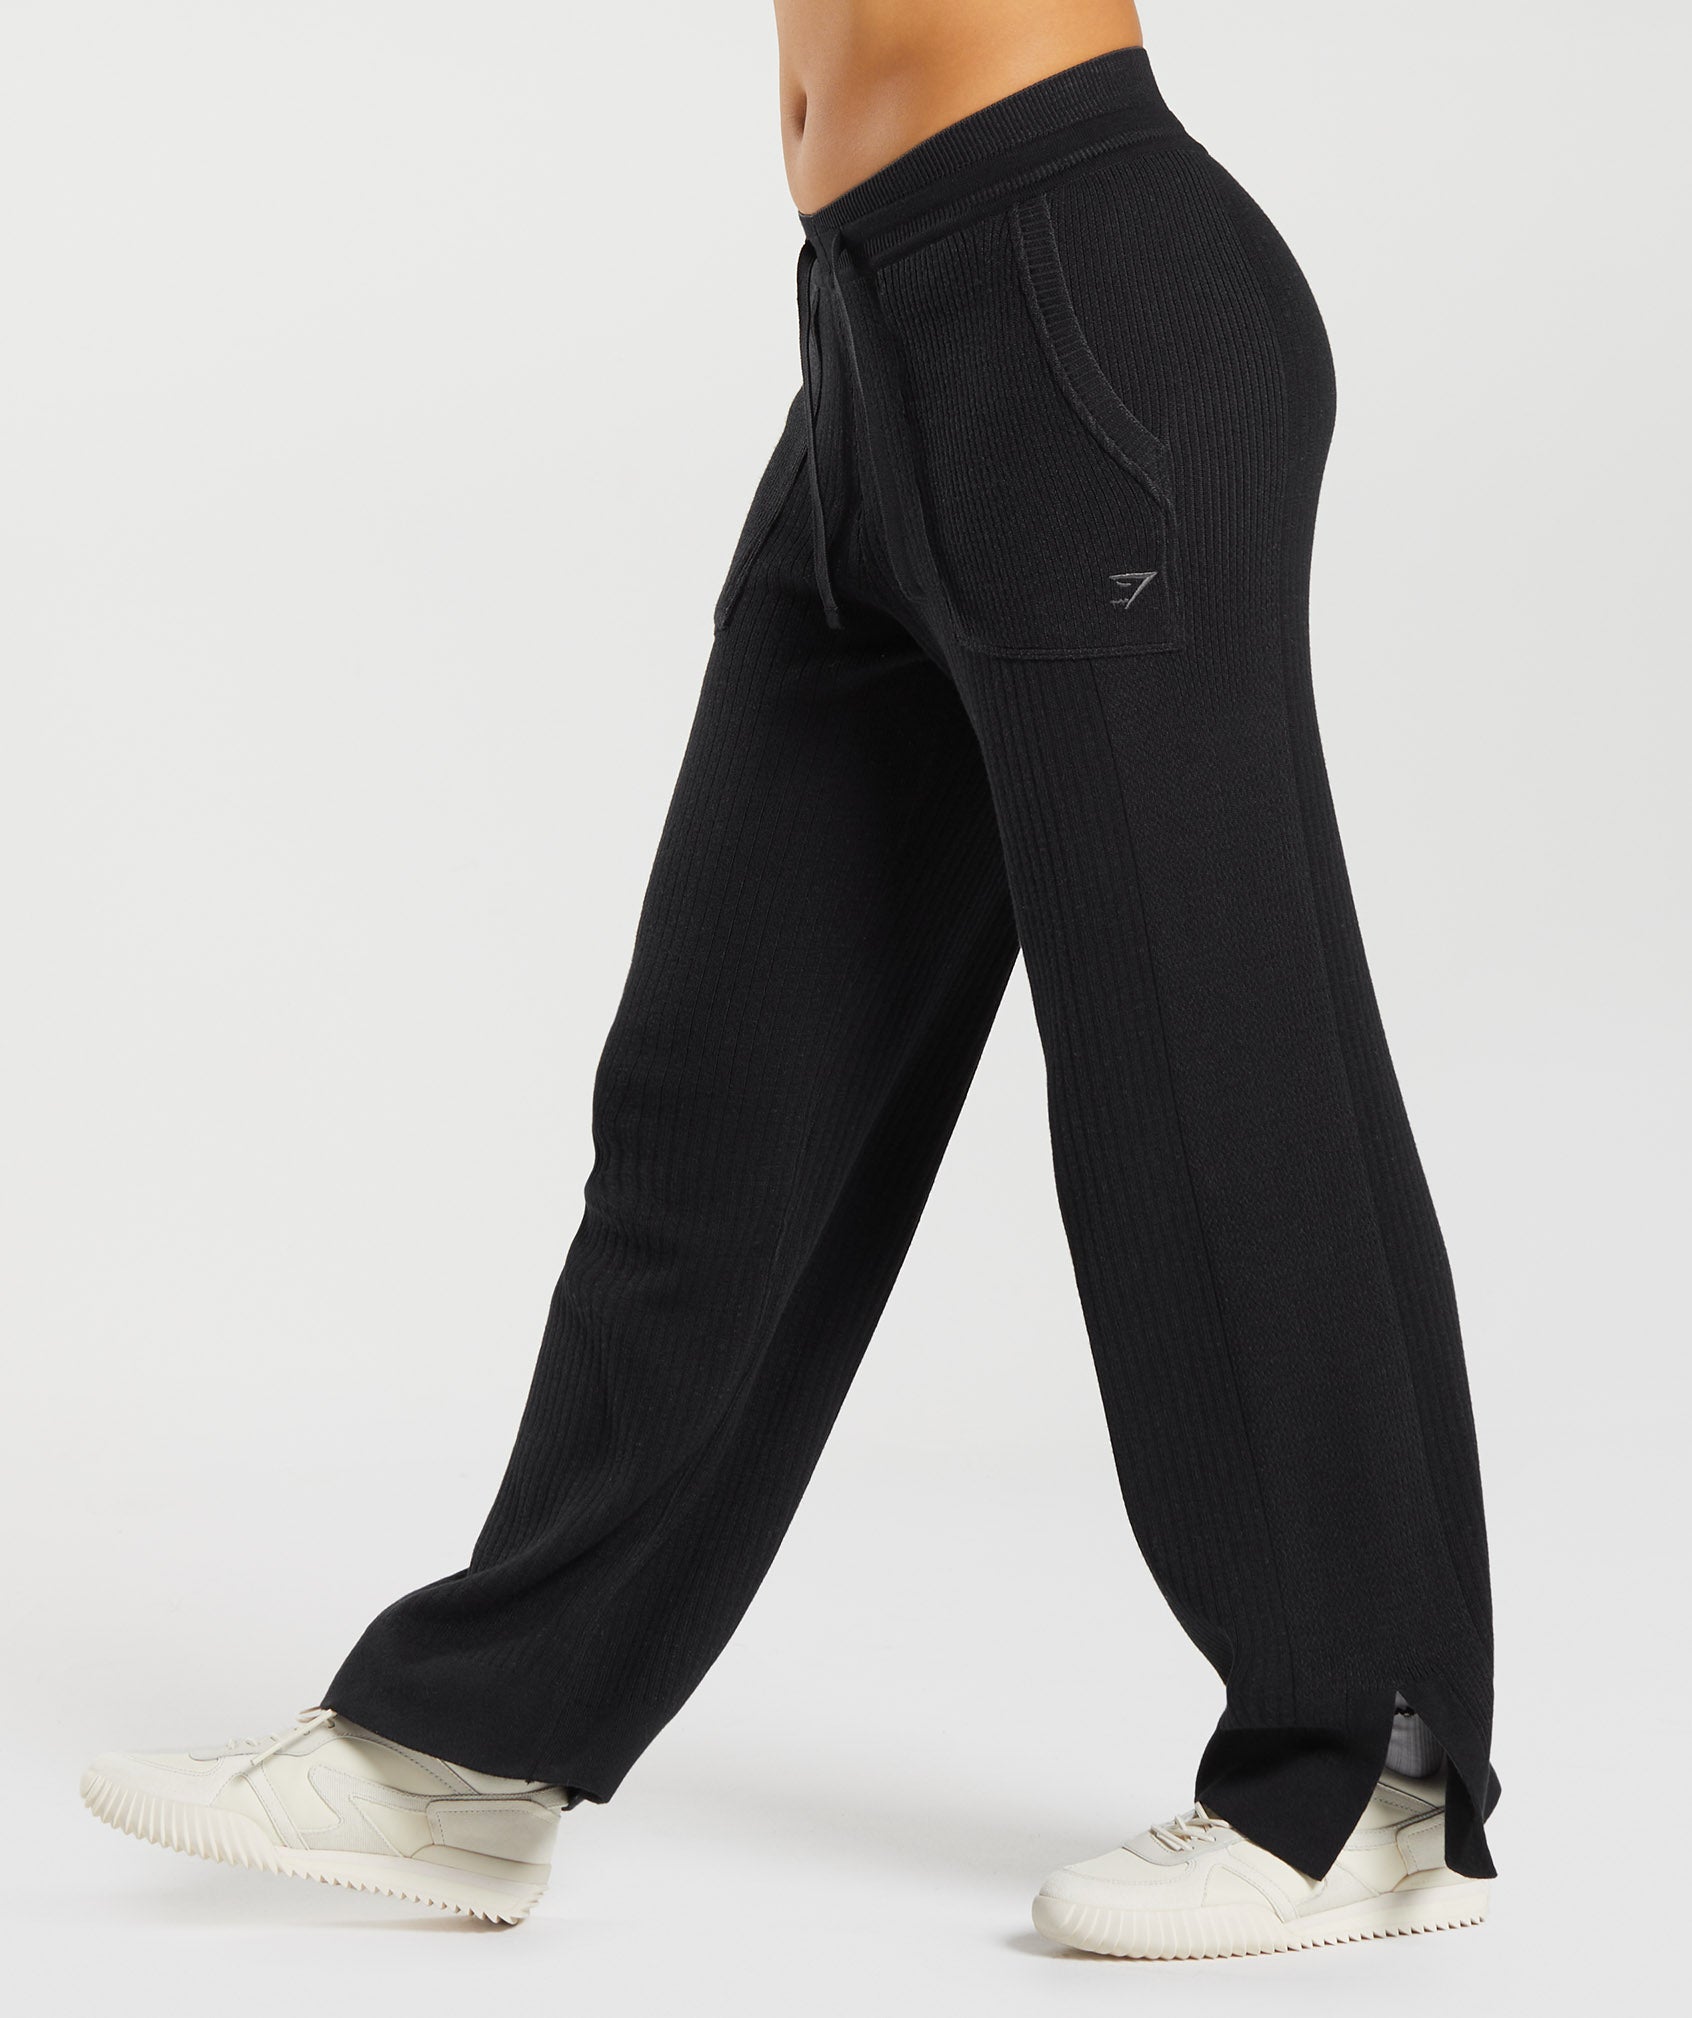 Gymshark Pause Knitwear Pants - Cement Brown/Pebble Grey